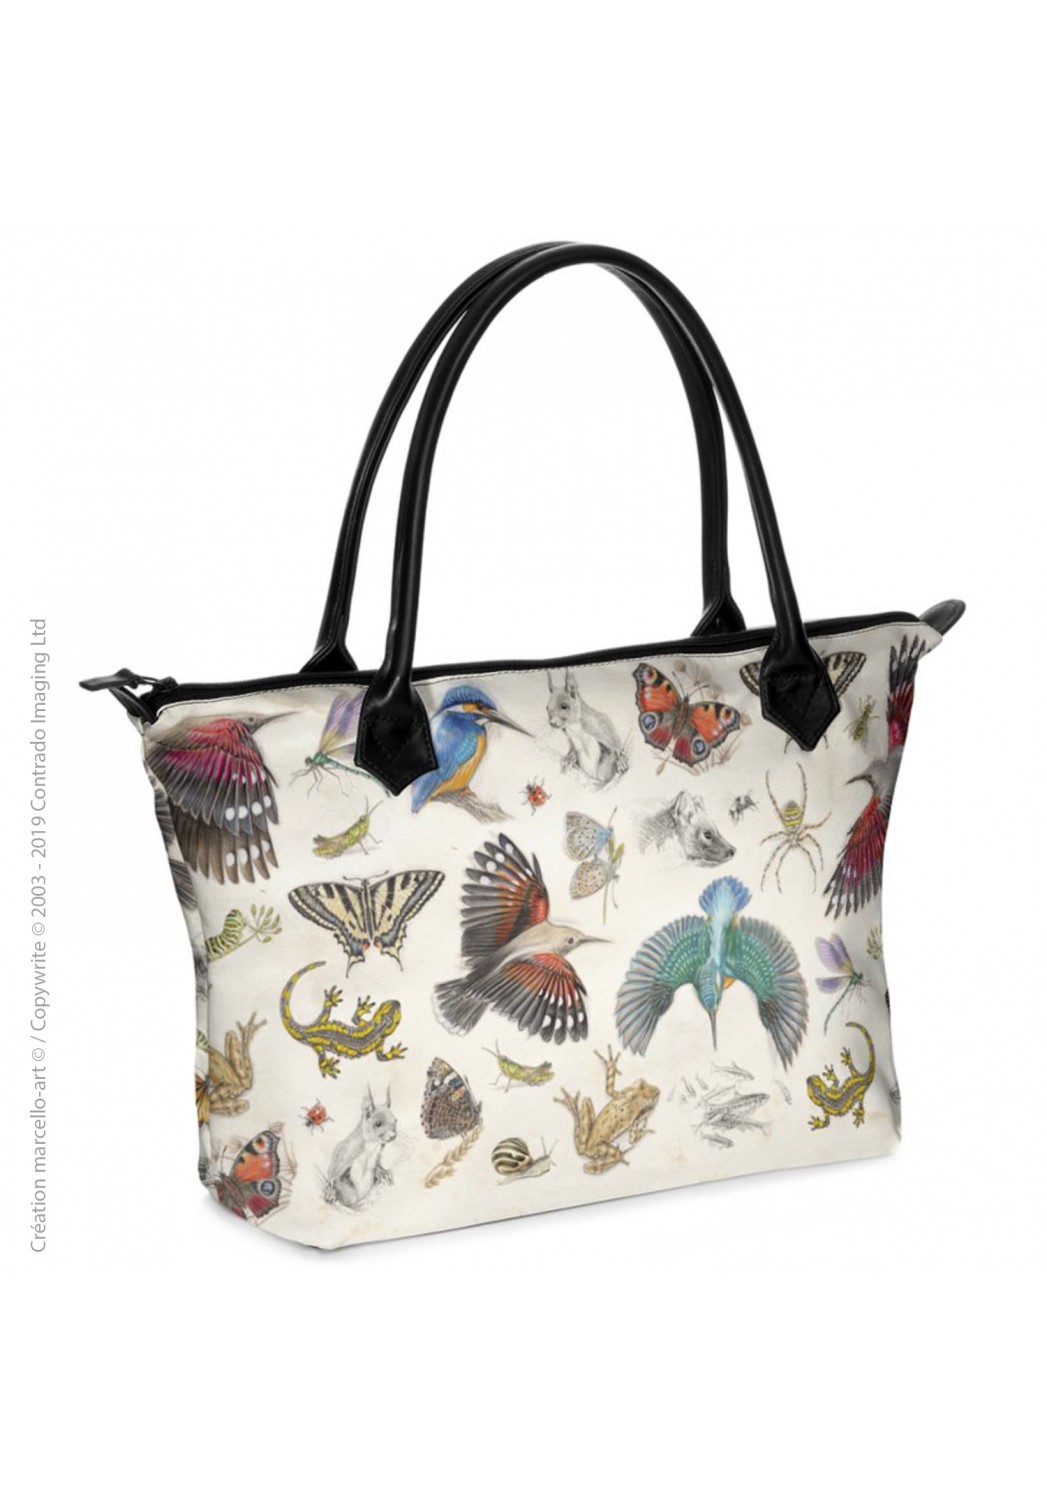 Marcello-art: Fashion accessory Zipped bag 422 naturalist